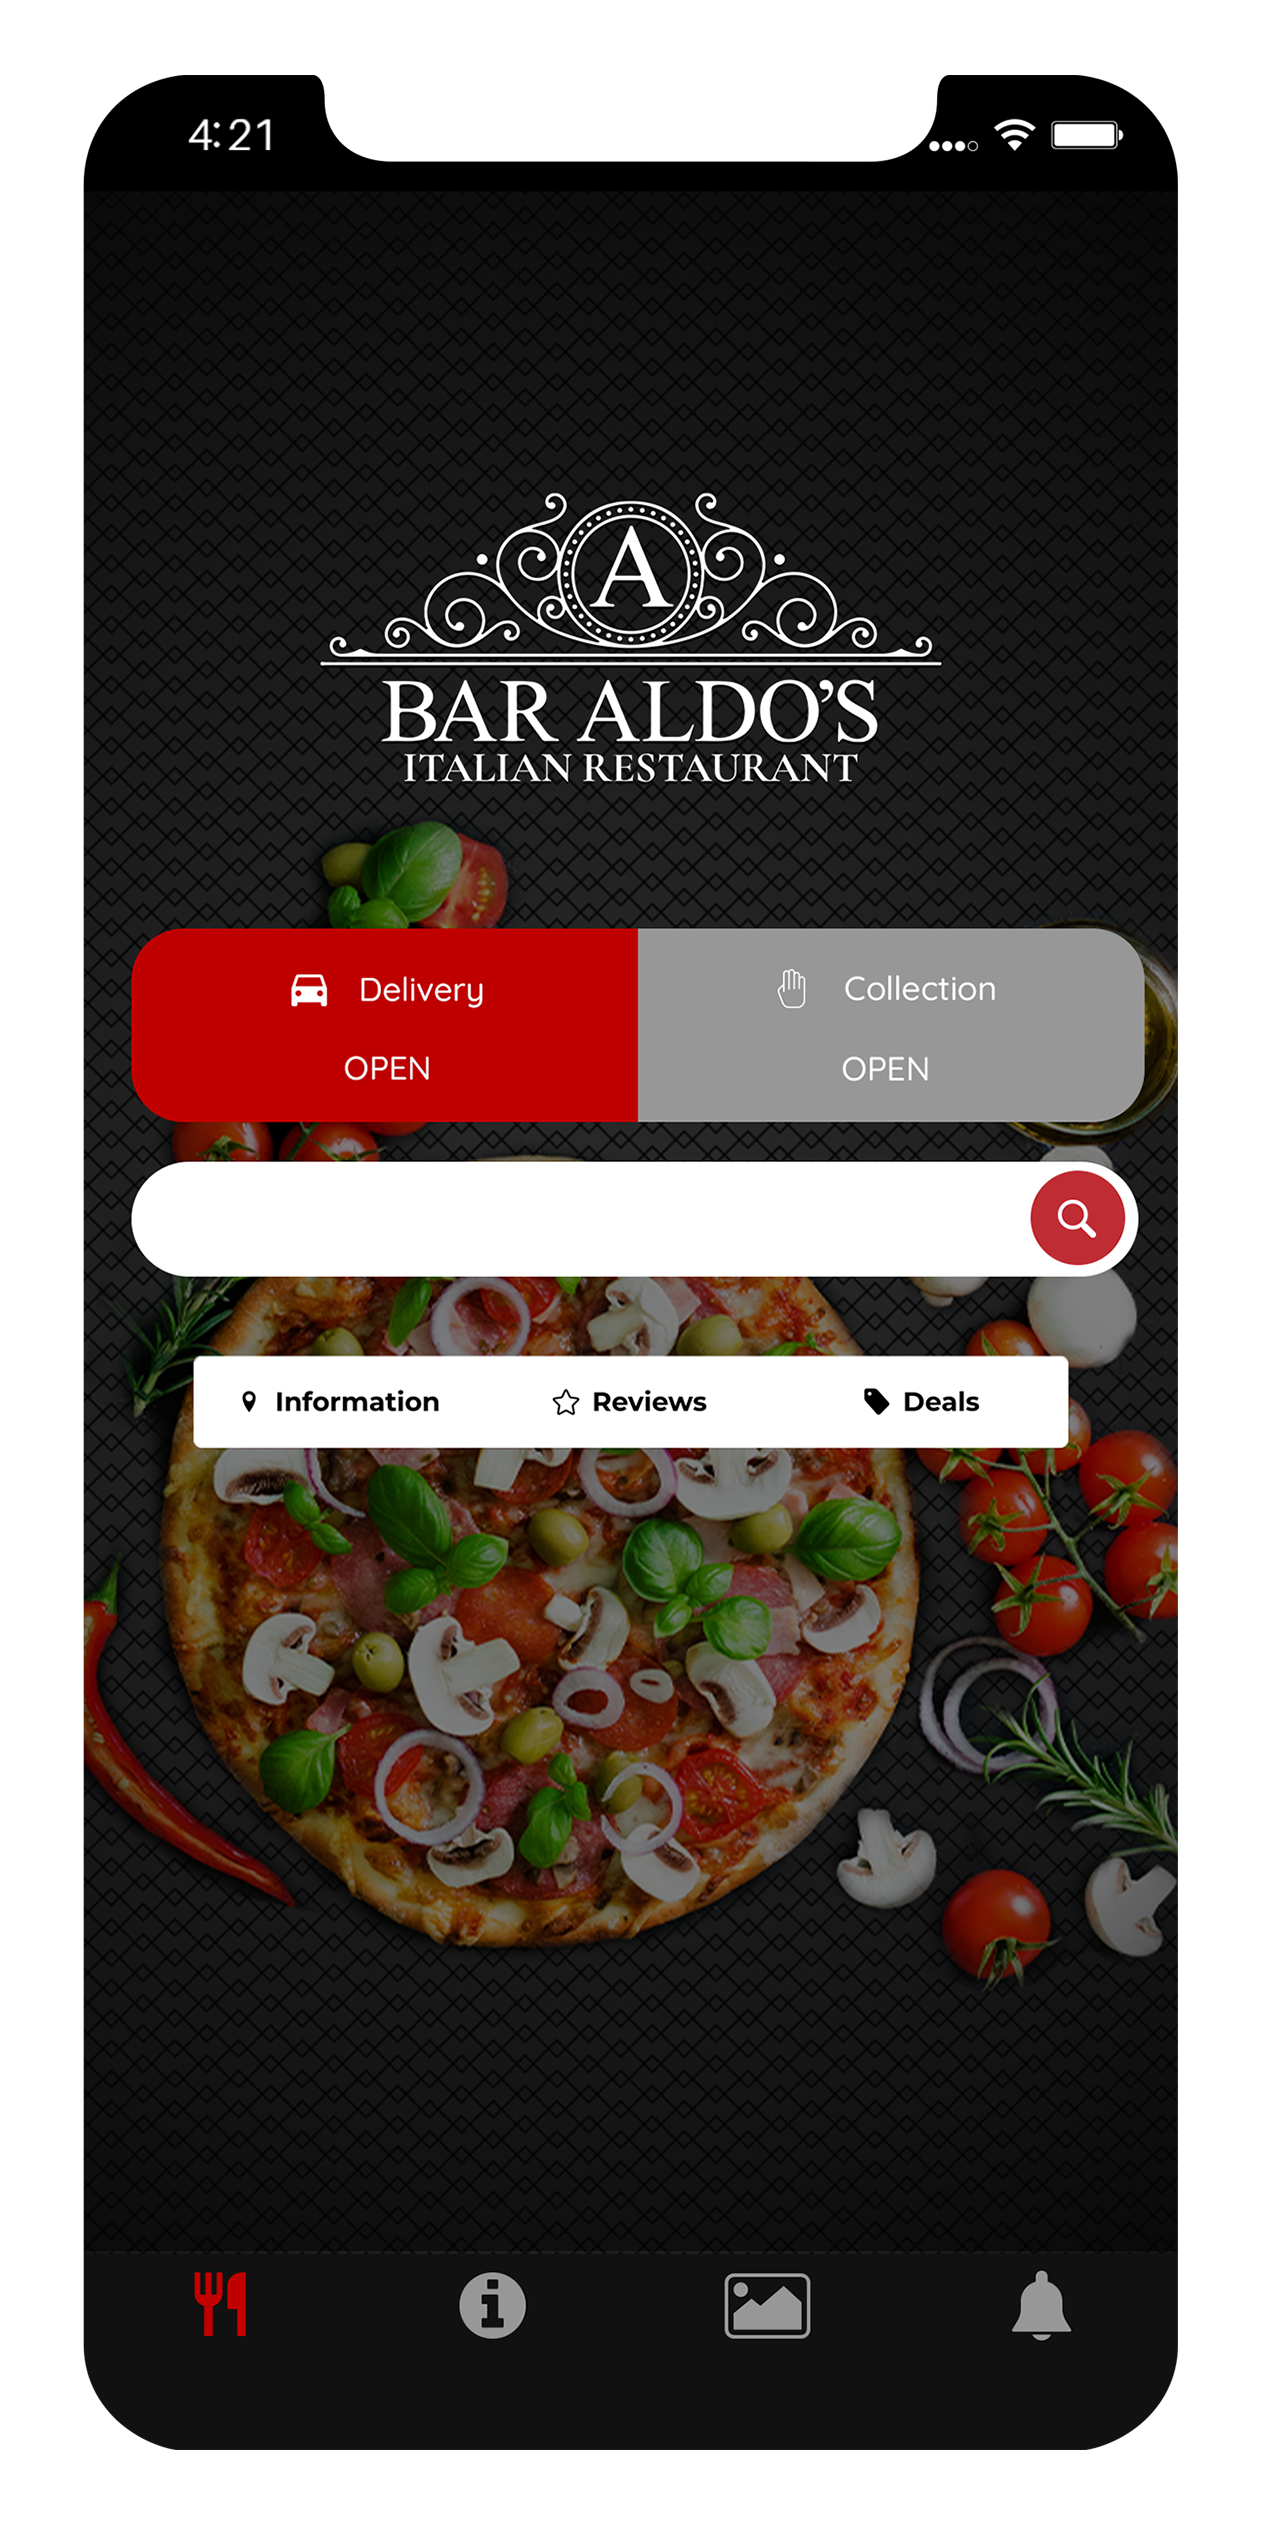 Bar Aldo's iPhone